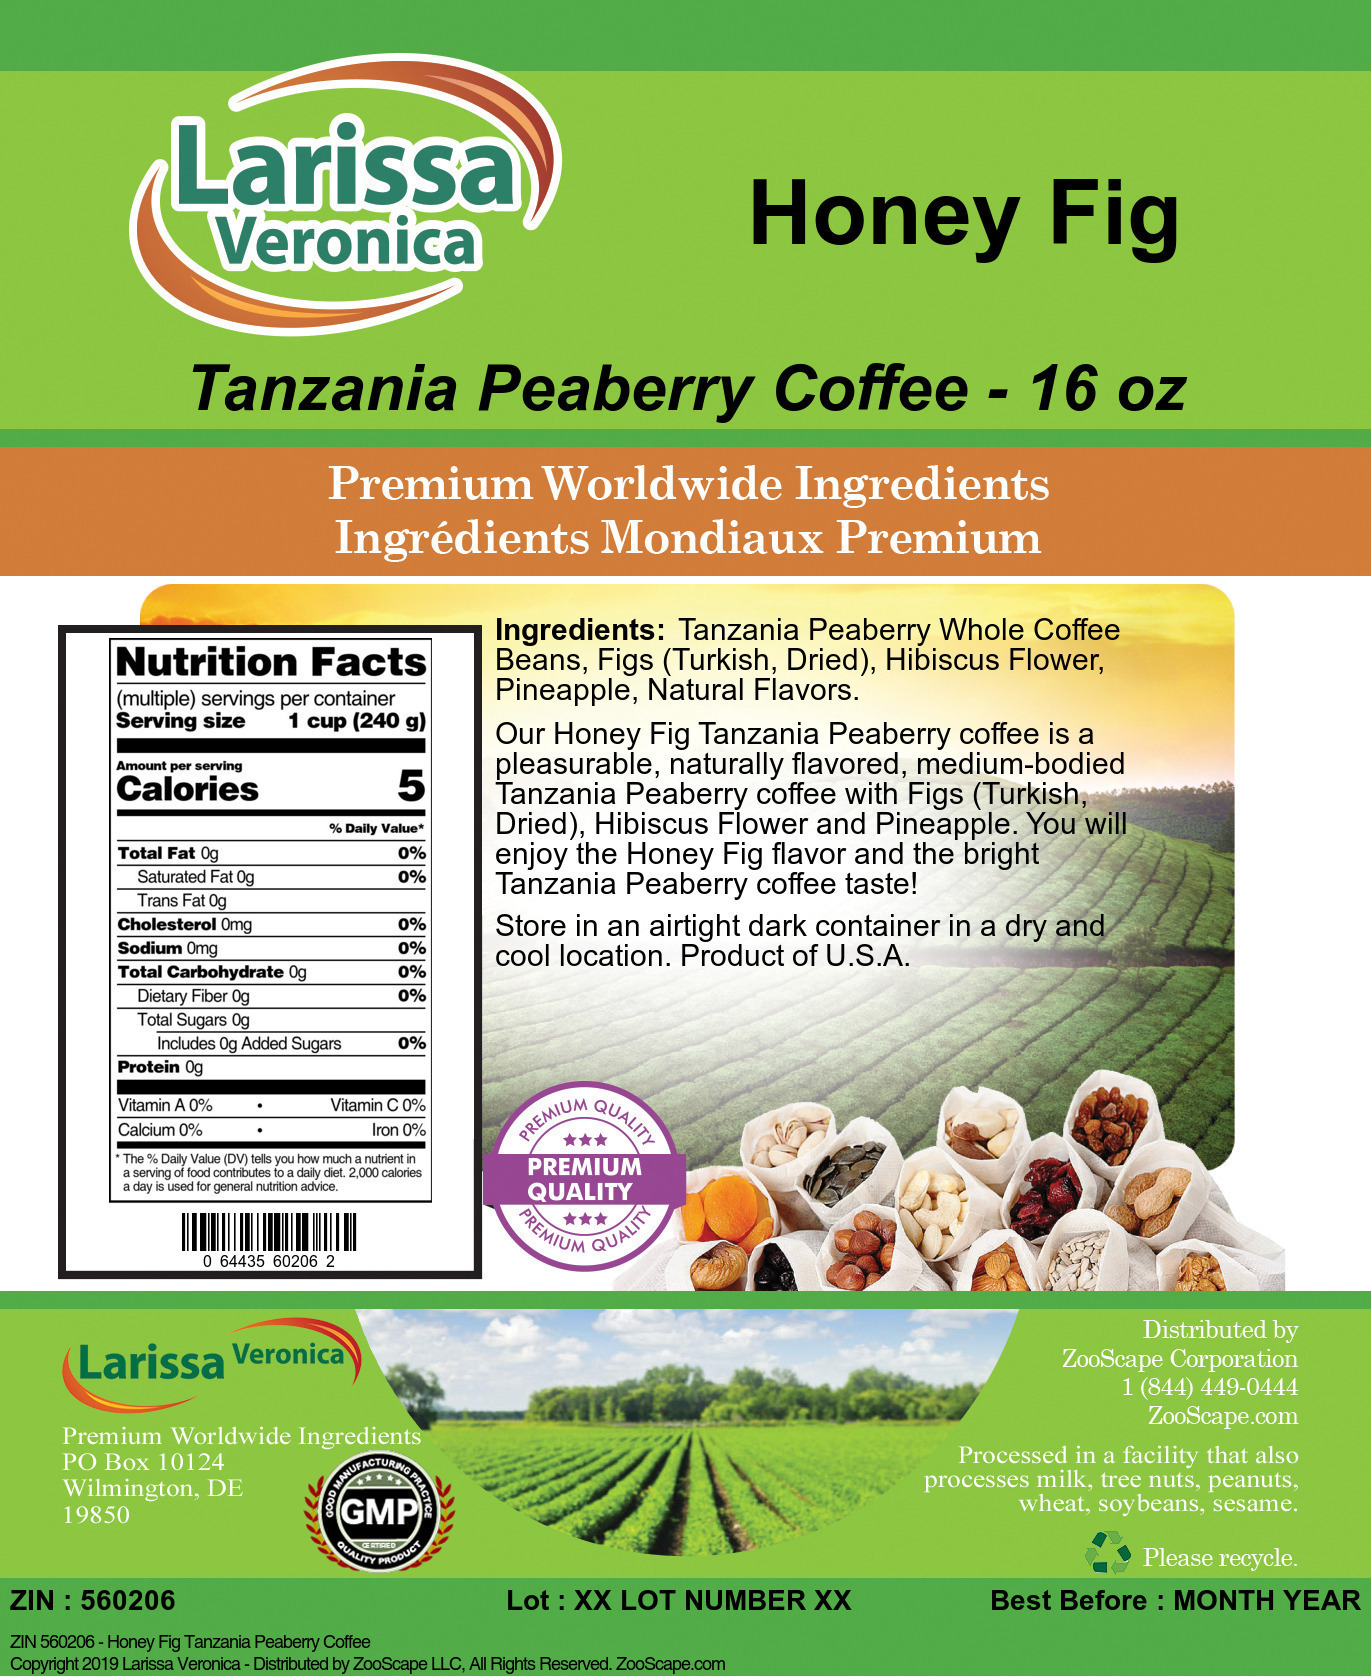 Honey Fig Tanzania Peaberry Coffee - Label